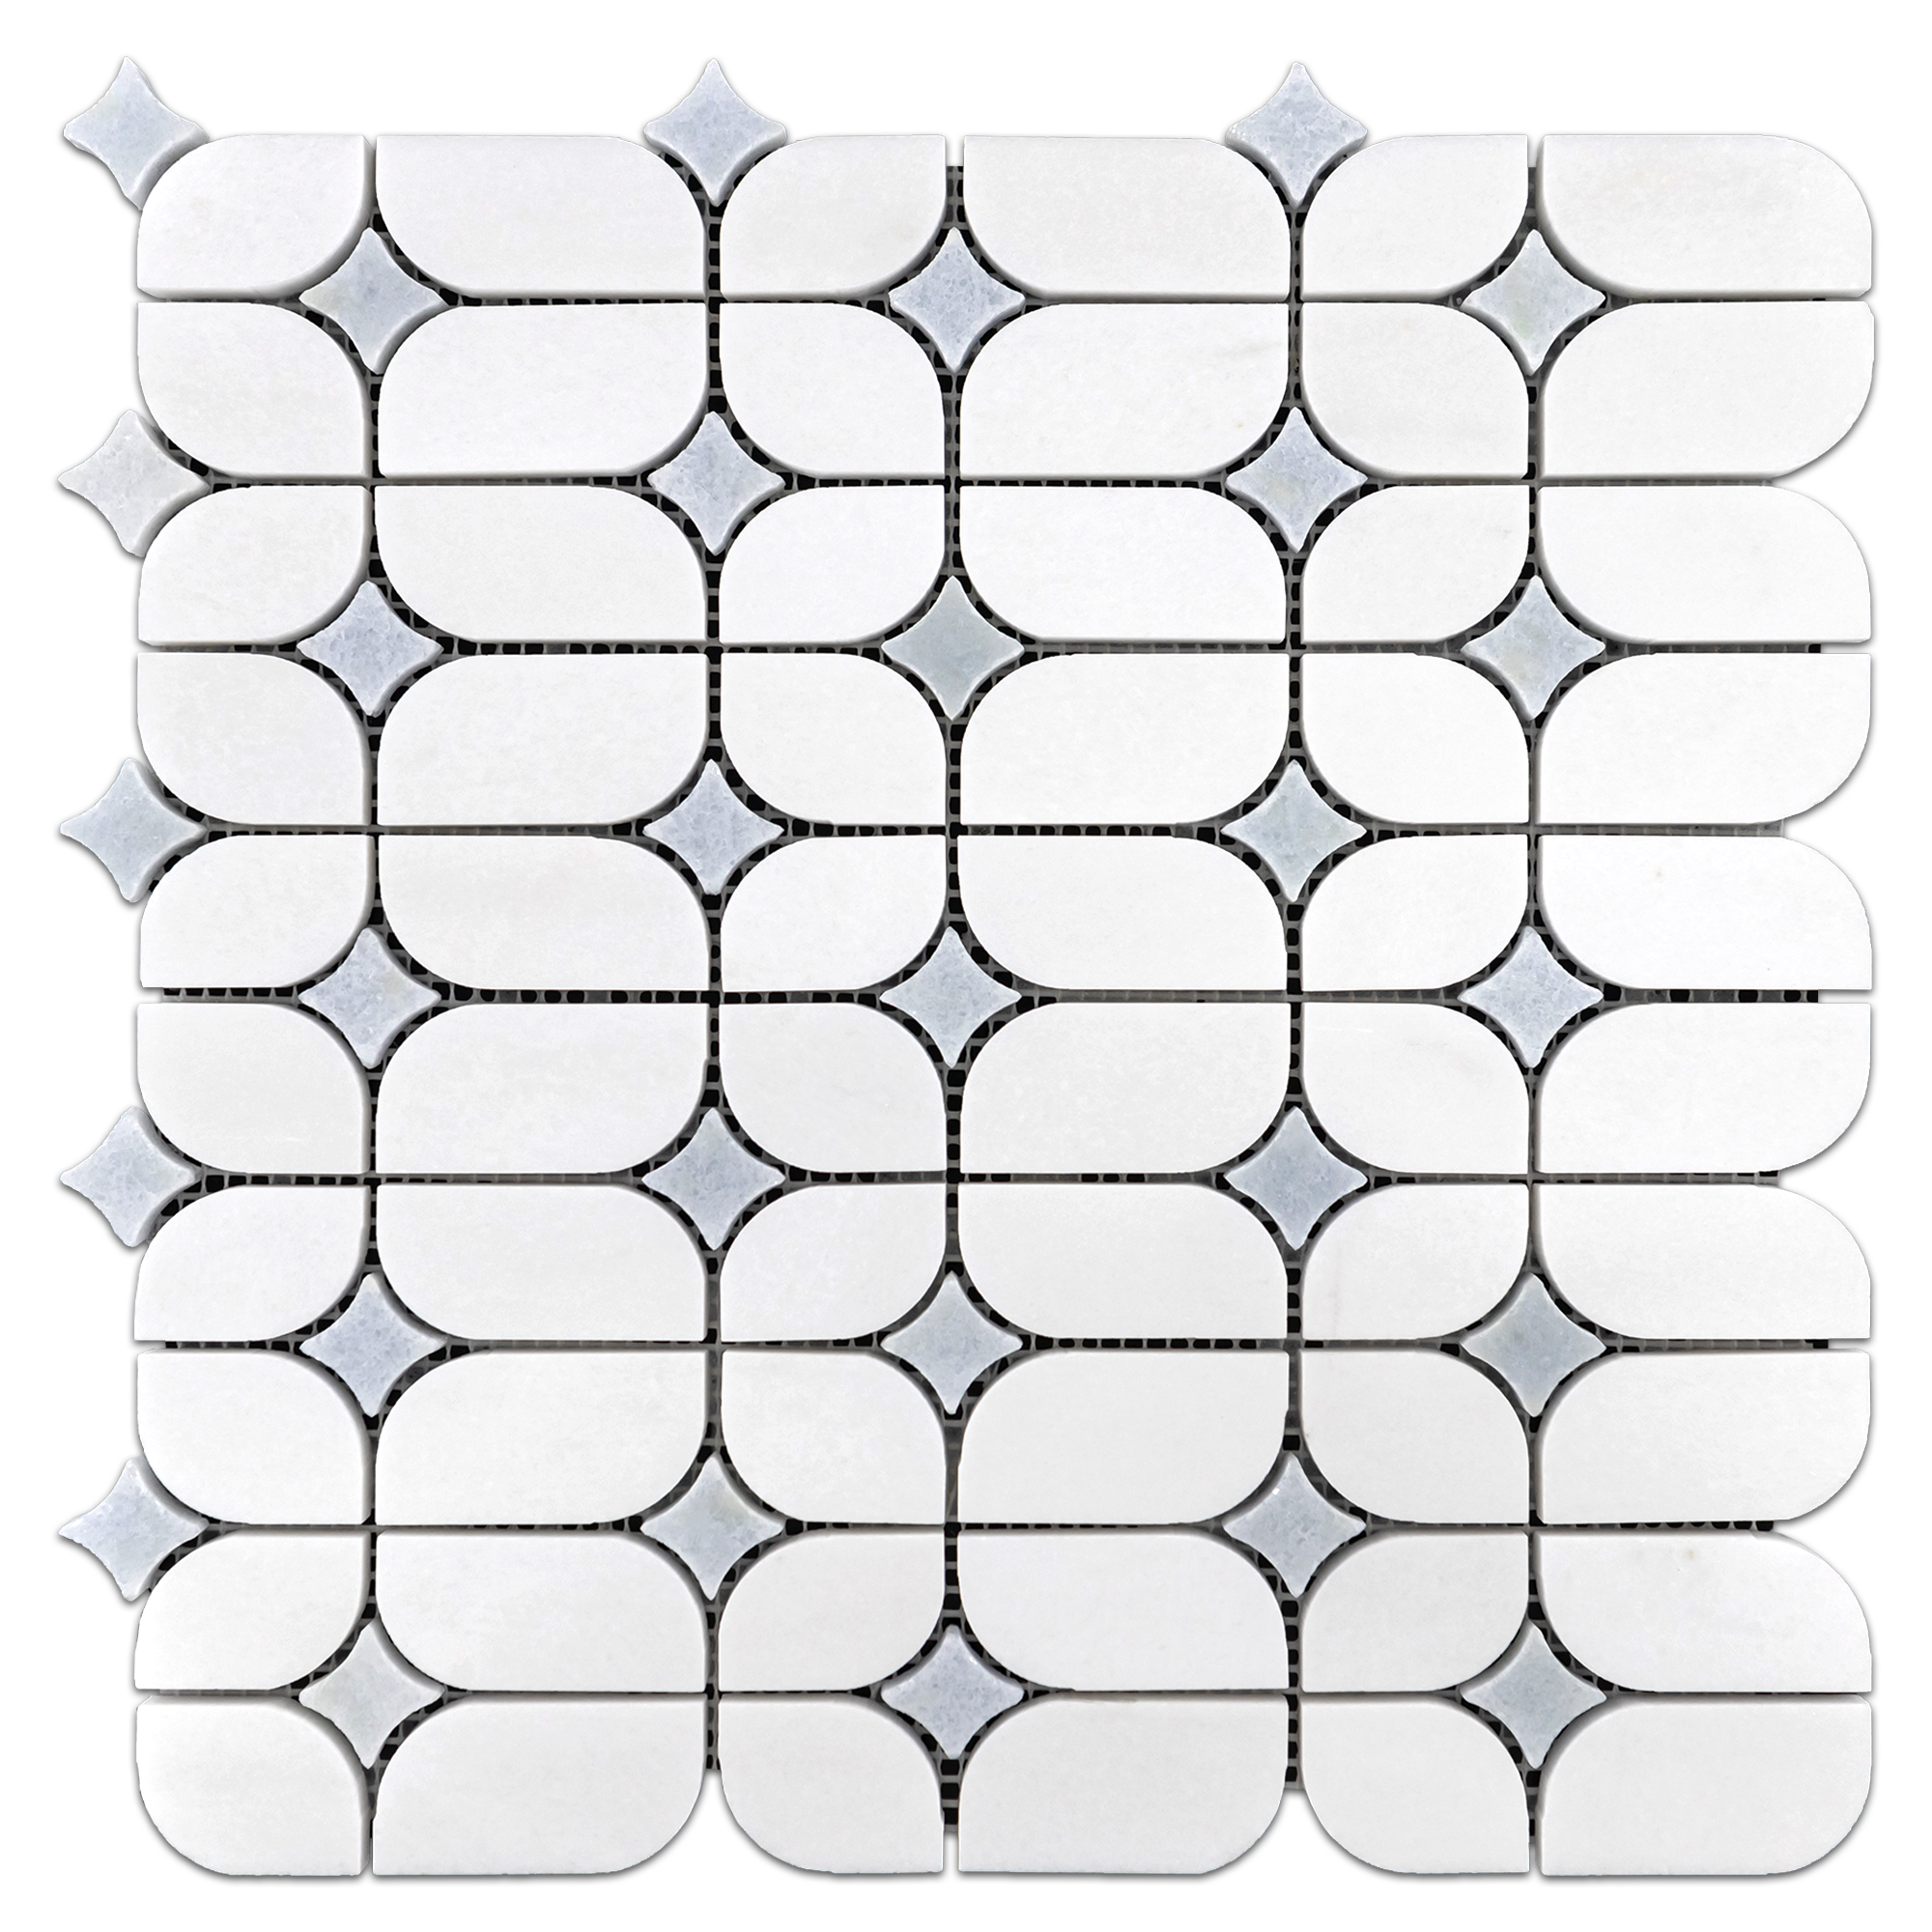 Elon White Thassos Blue Celeste Marble Starlight Field Mosaic 12x12x0.375 Polished Tile - Surface Group Online Tile Store